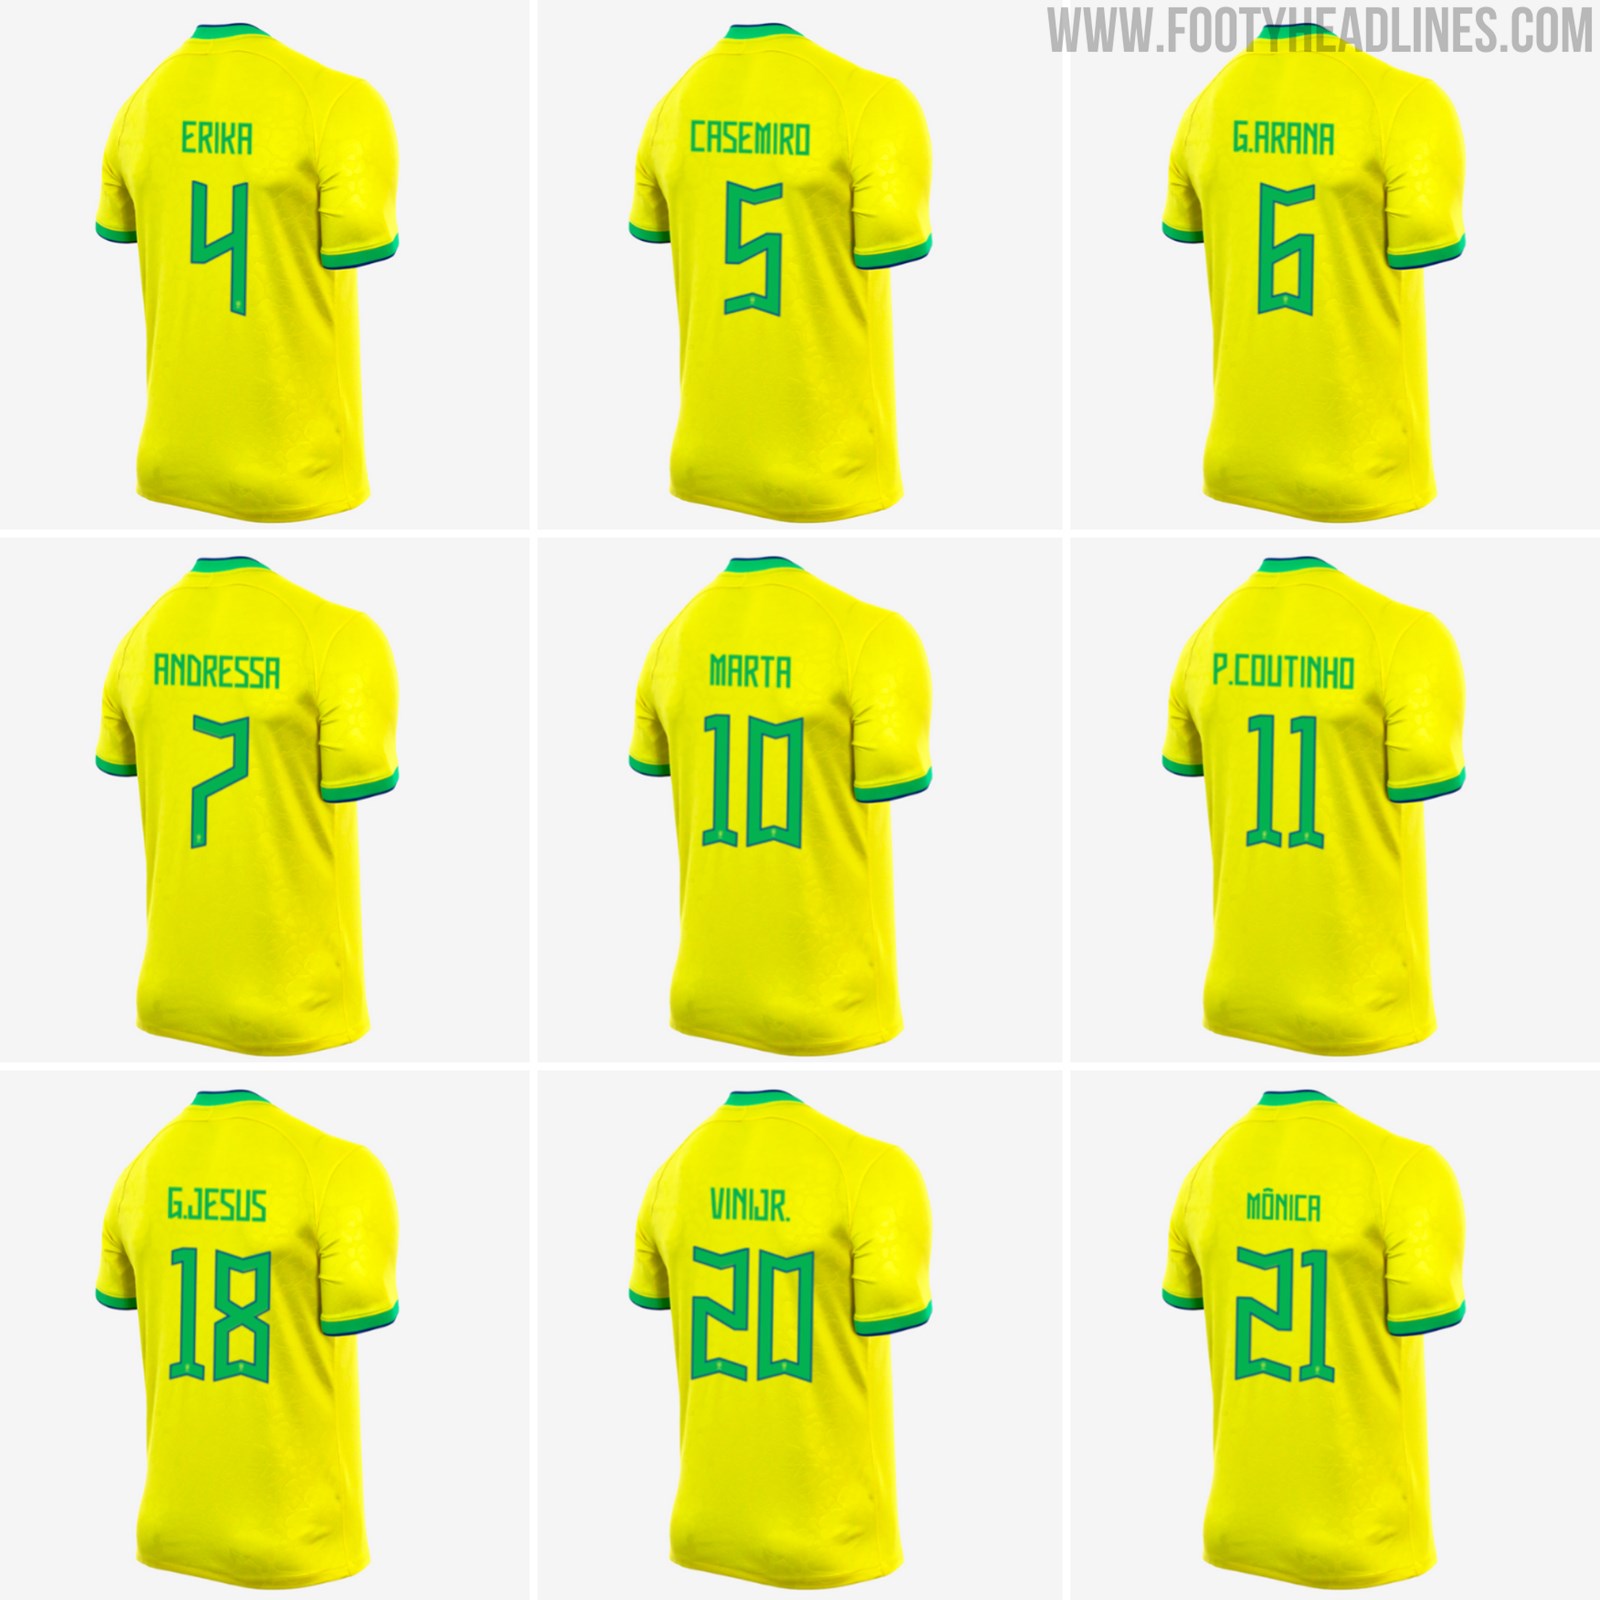 Campeonato Brazil League Team Football Shirts, Kit & T-shirts by